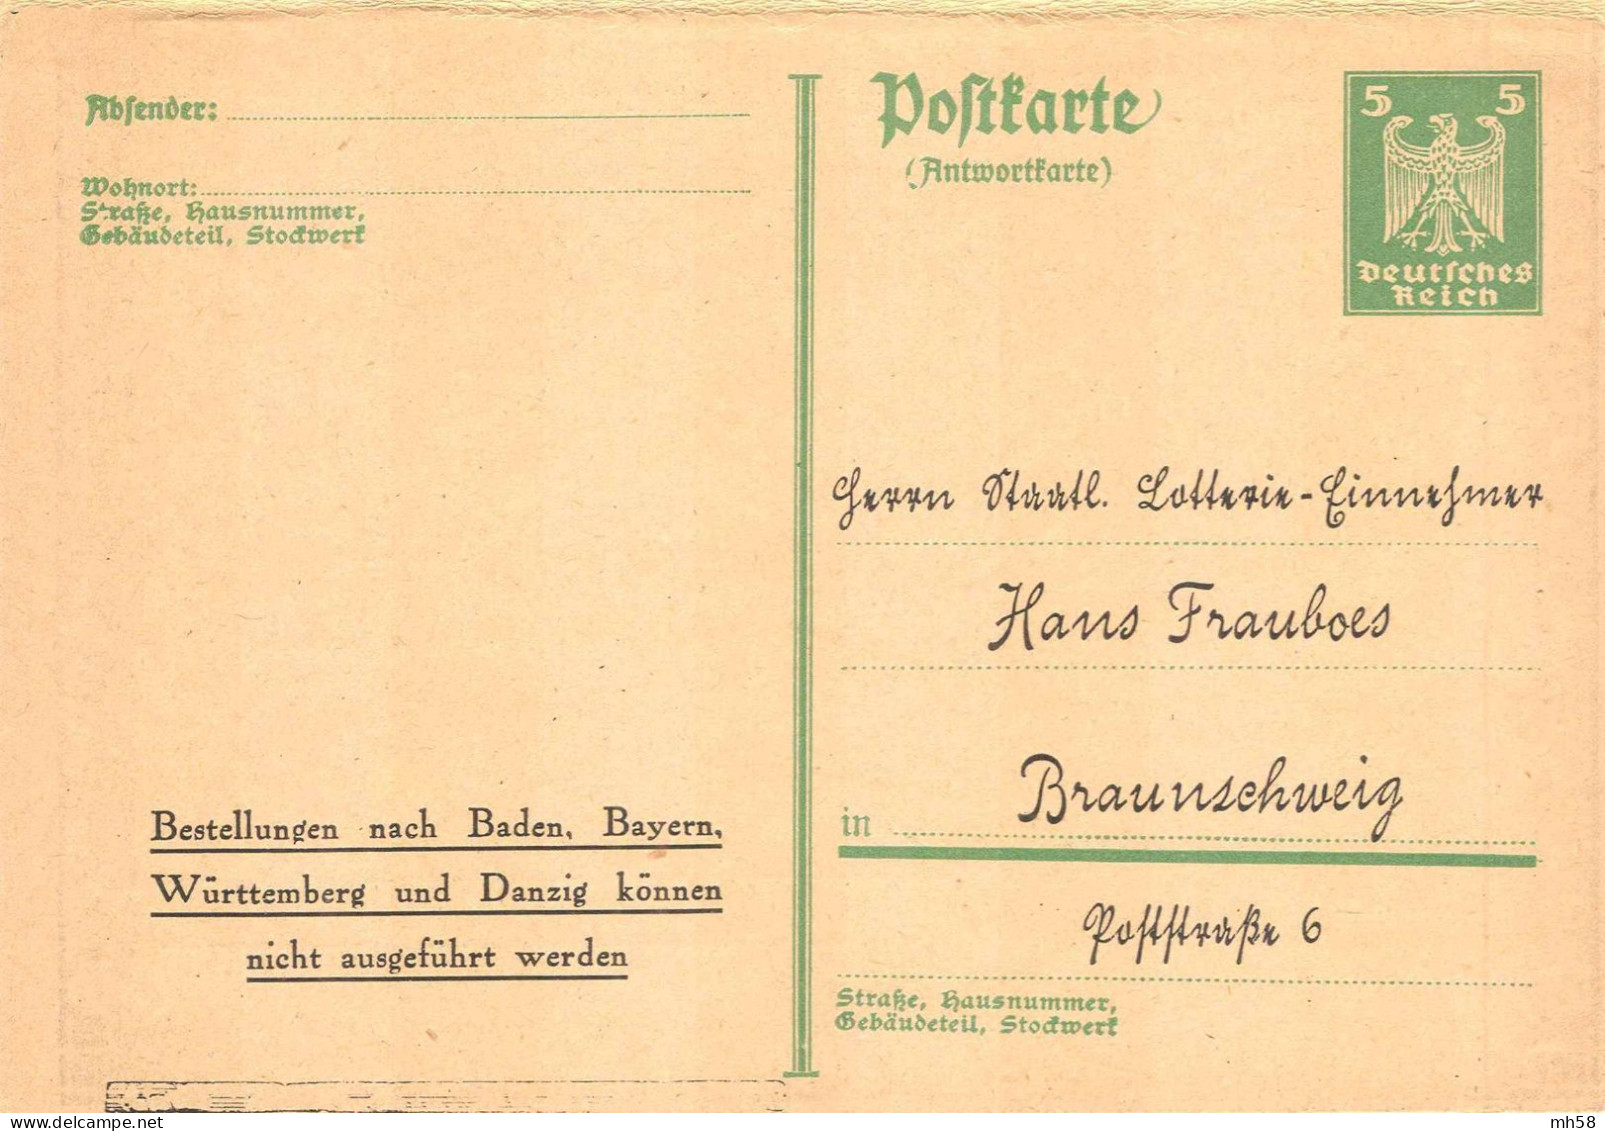 ALLEMAGNE REICH - Entier Privé Réponse Payée / Ganzsache Privat Antwortpostkarte - Lotterie Frauboes Braunschweig - Cartes Postales